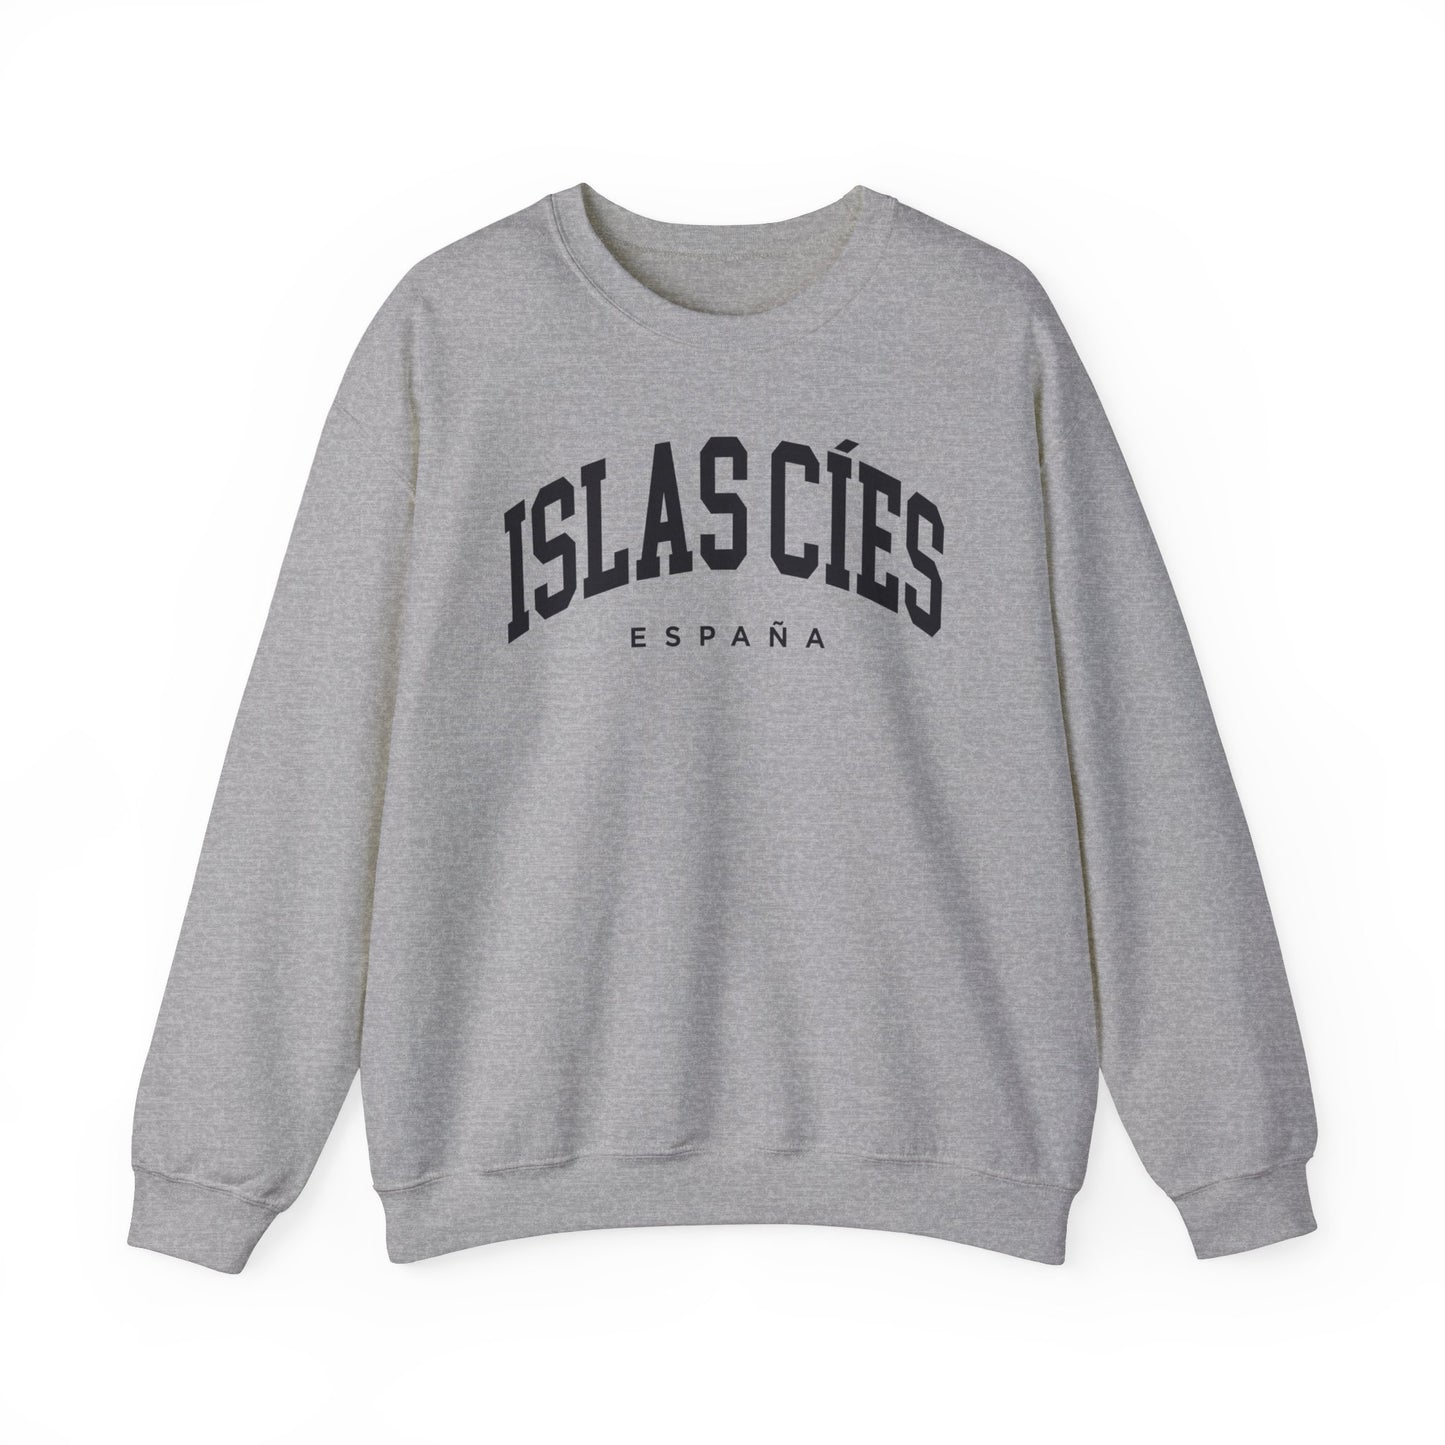 Cíes Islands Spain Sweatshirt